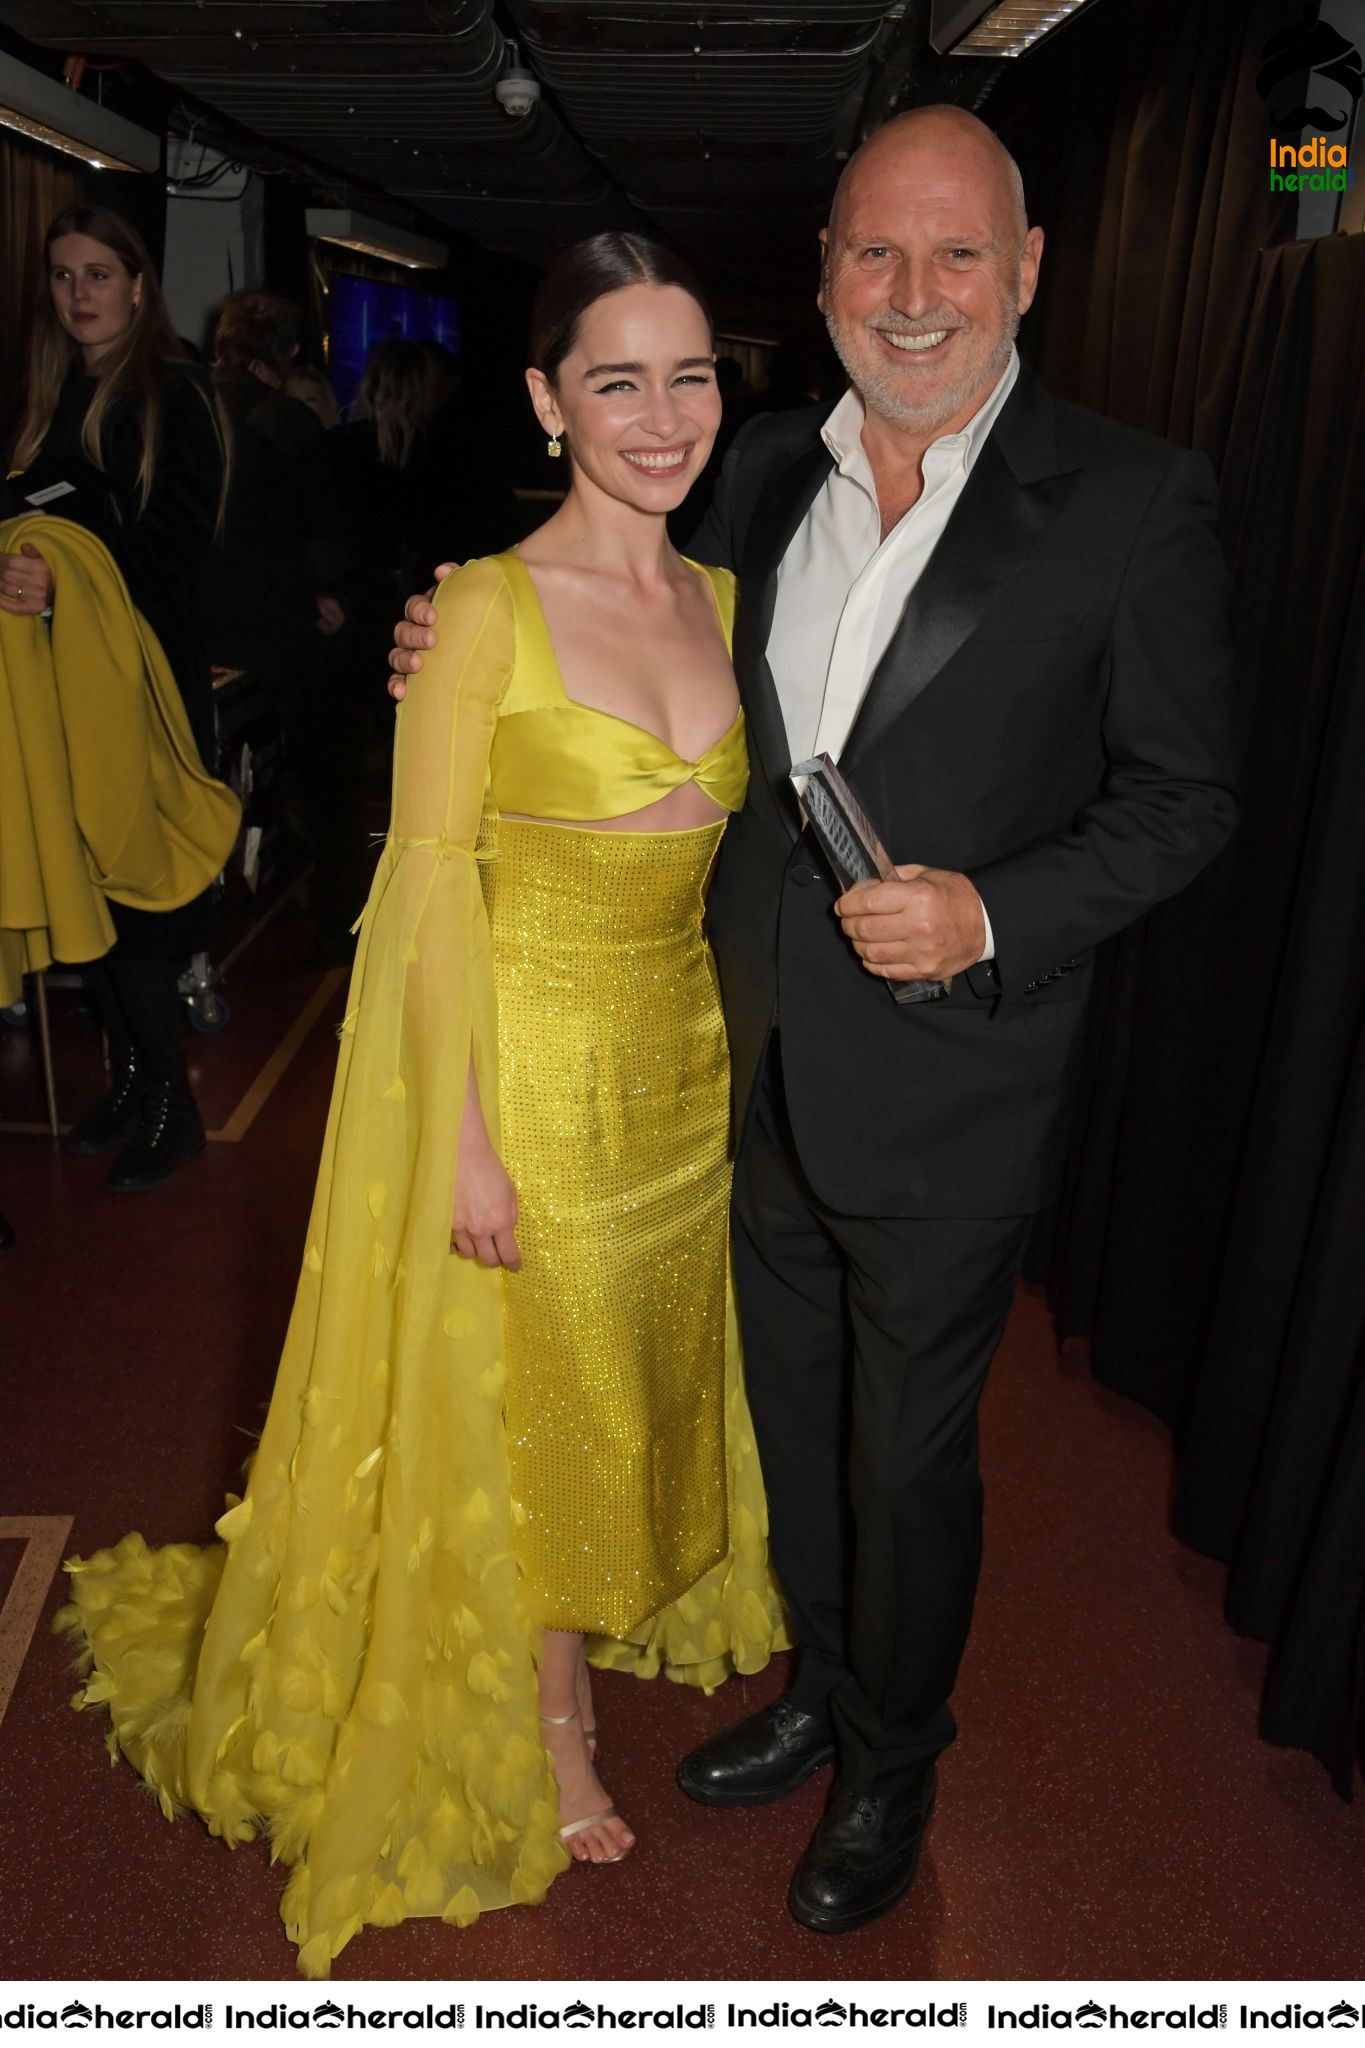 Emilia Clarke at The Fashion Awards 2019 in London Set 2